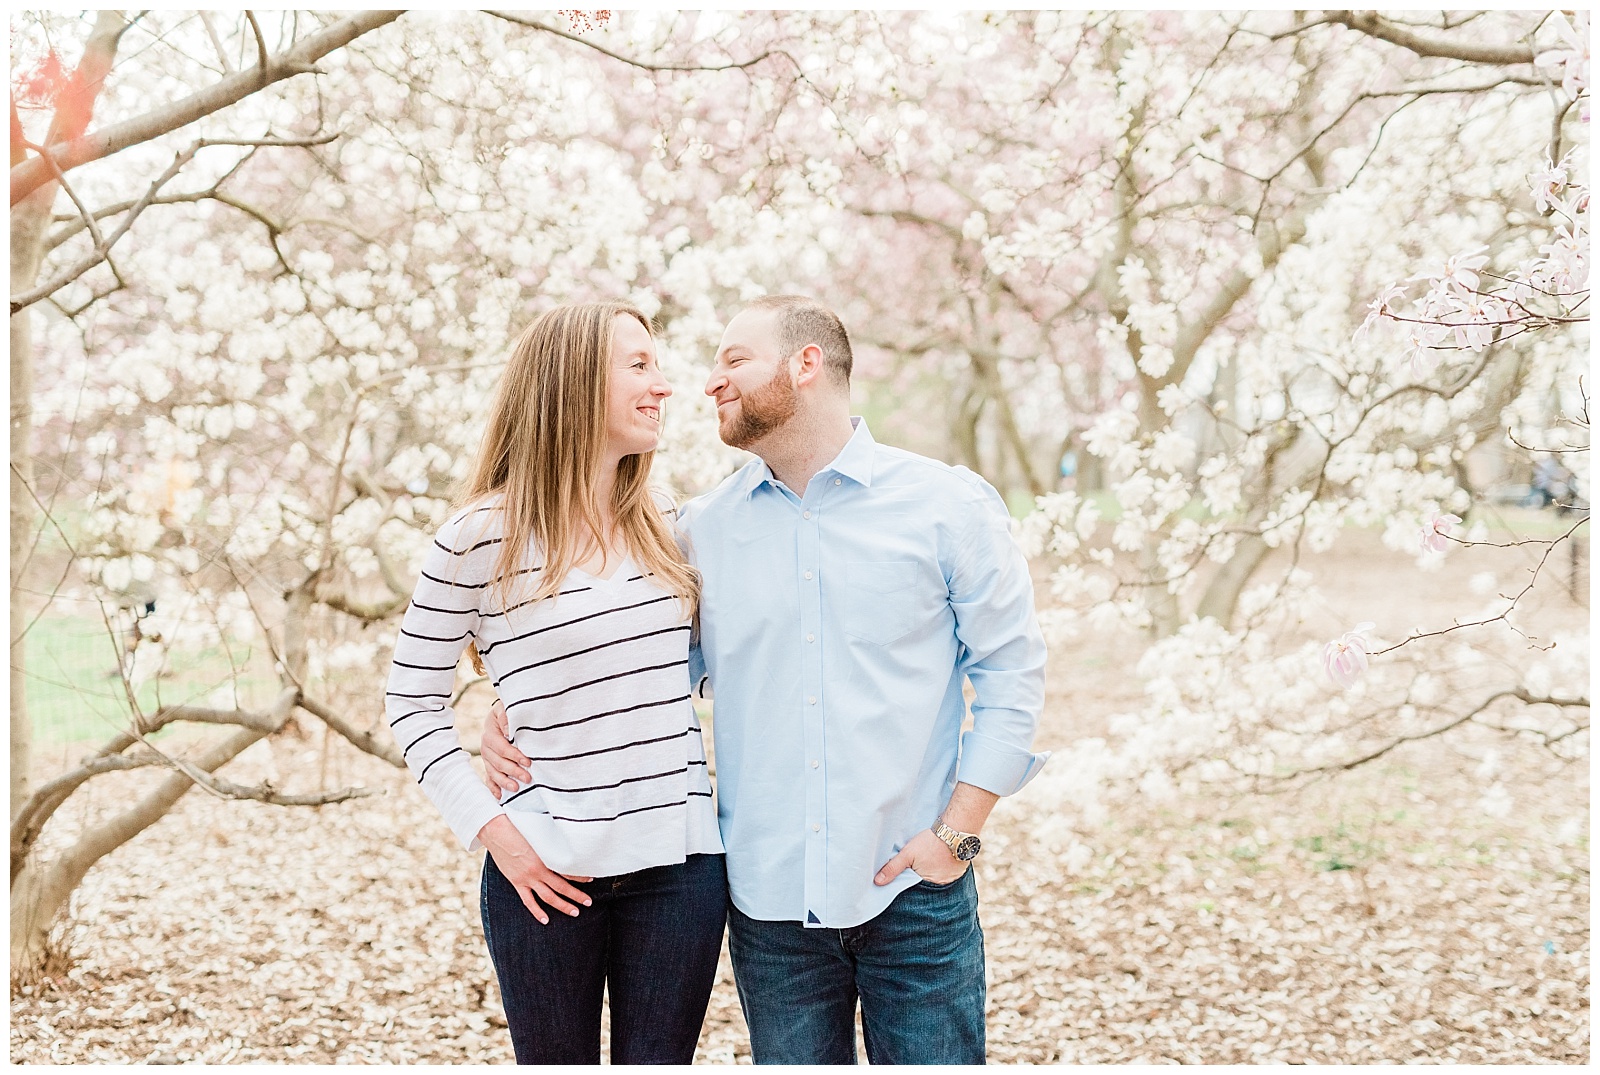 Central Park, NYC engagement session, springtime, wedding photographer, New York, cherry blossom, flowers, bloom, petals